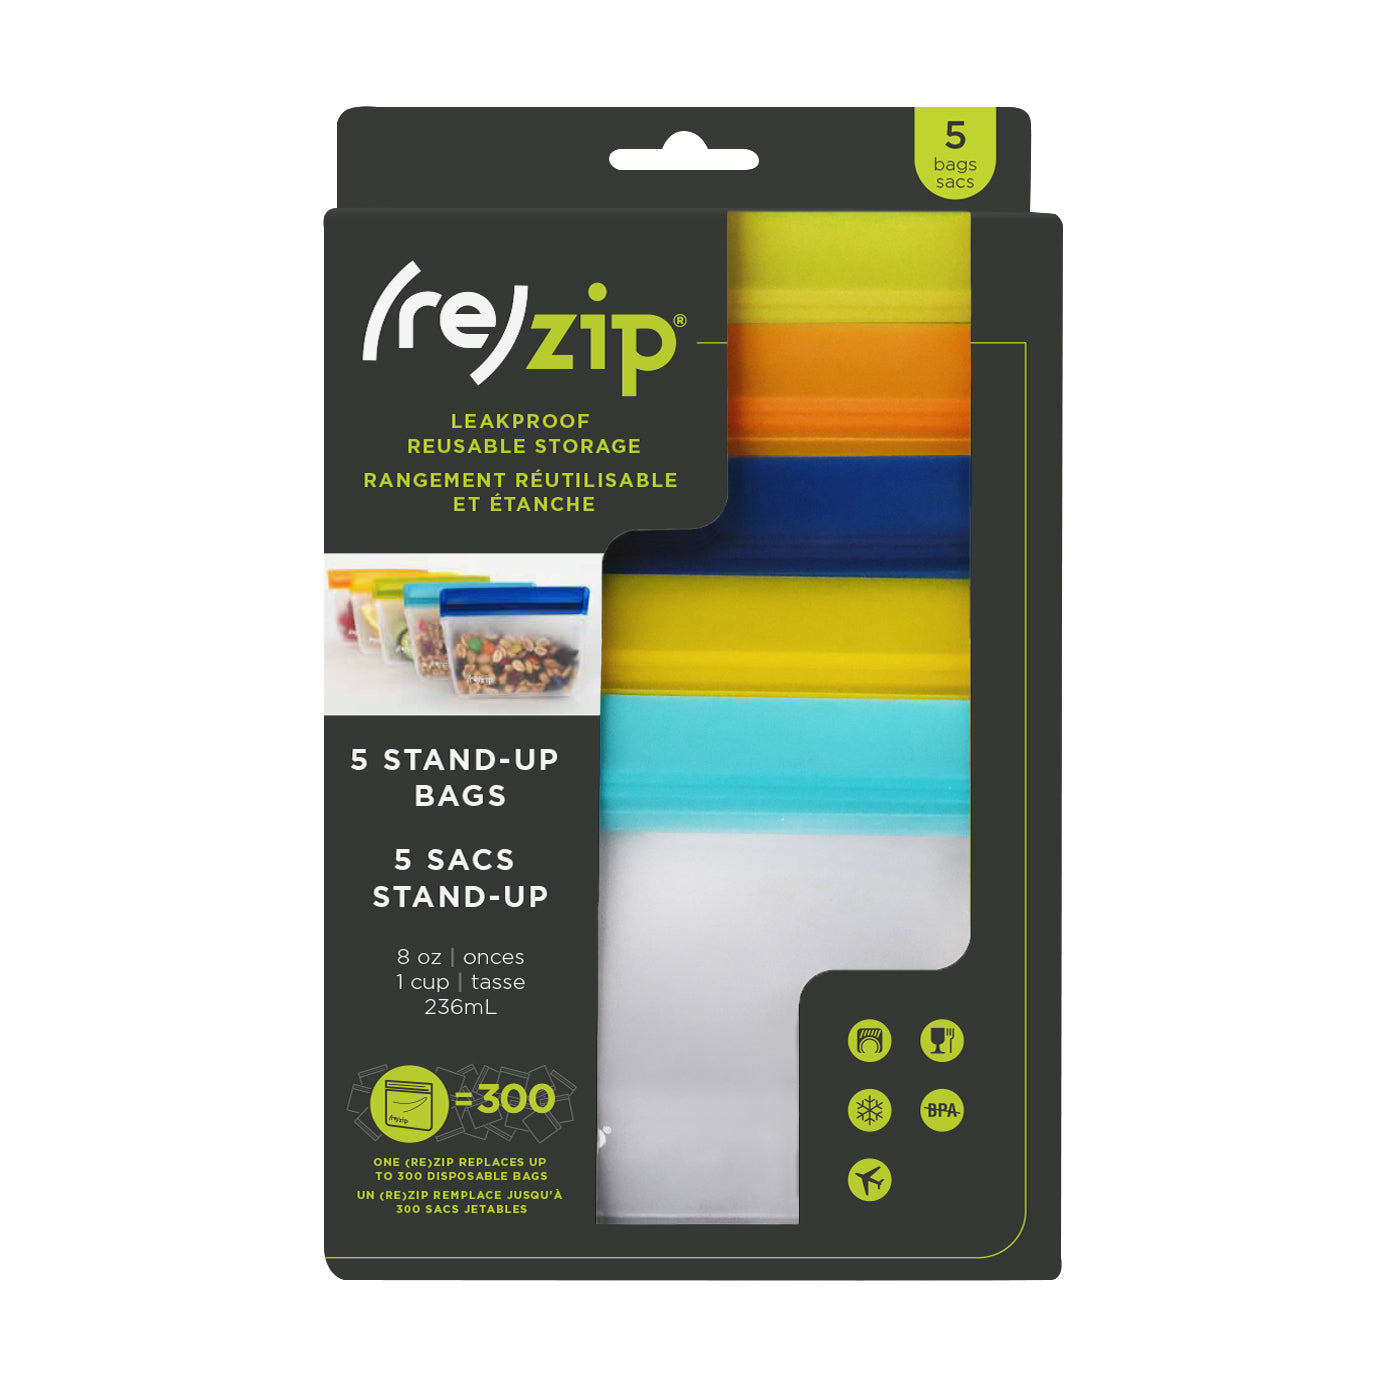 re)zip 5-Piece Stand-Up Leakproof Reusable Storage Bag Starter Kit